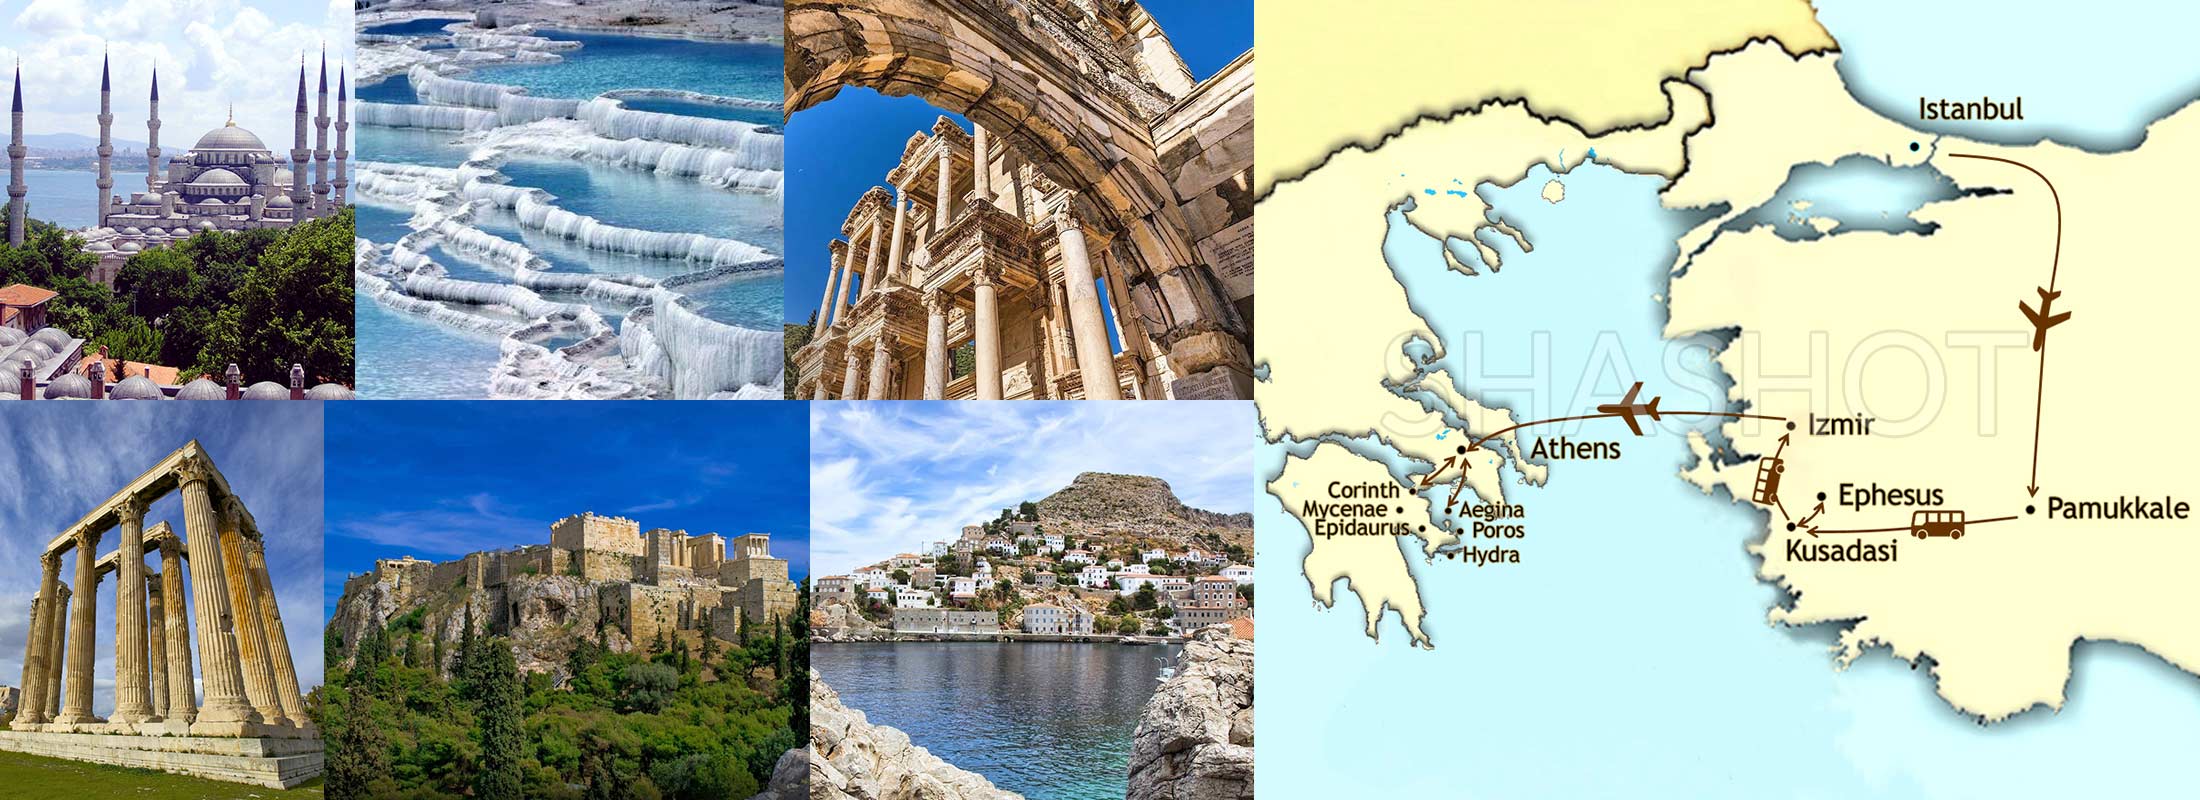 9-DAYS-TURKEY-GREECE-PACKAGE-TOUR-ISTANBUL-EPHESUS-PAMUKKALE-ATHENS-AEGINA-HYDRA-CORINTO-POROS-map